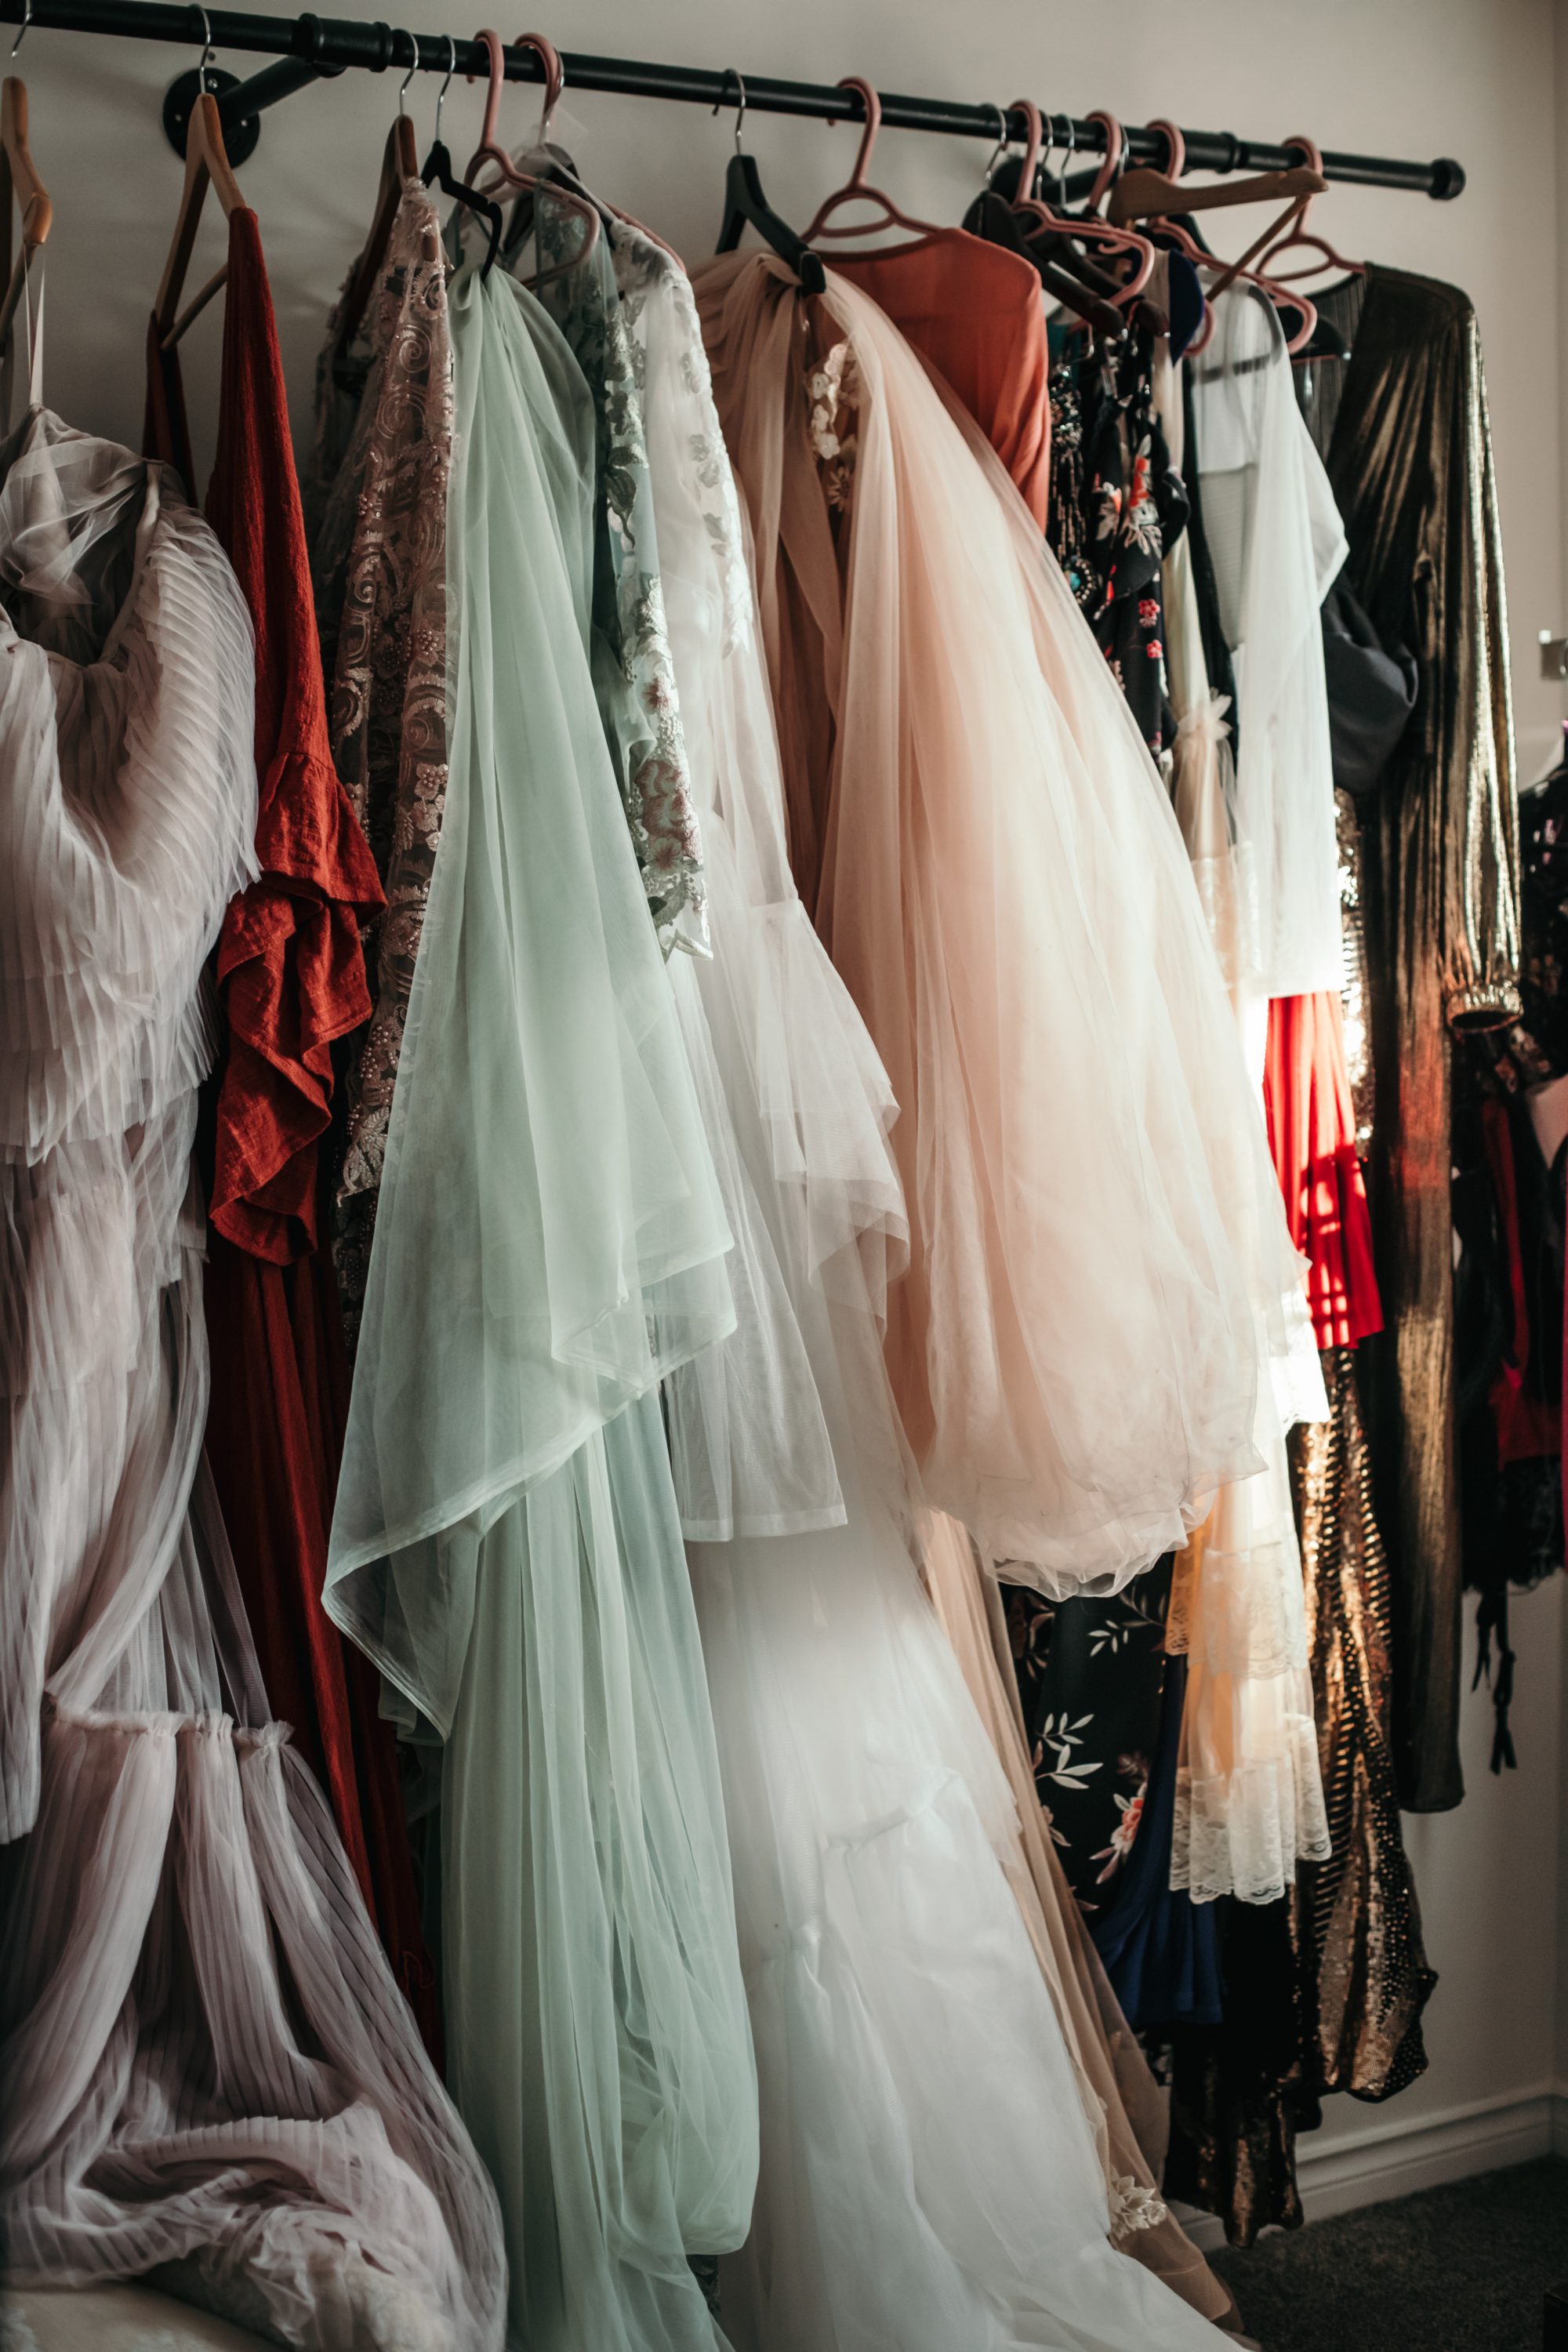 A sneak peek inside the Gabriella Cruz boudoir photography client wardrobe